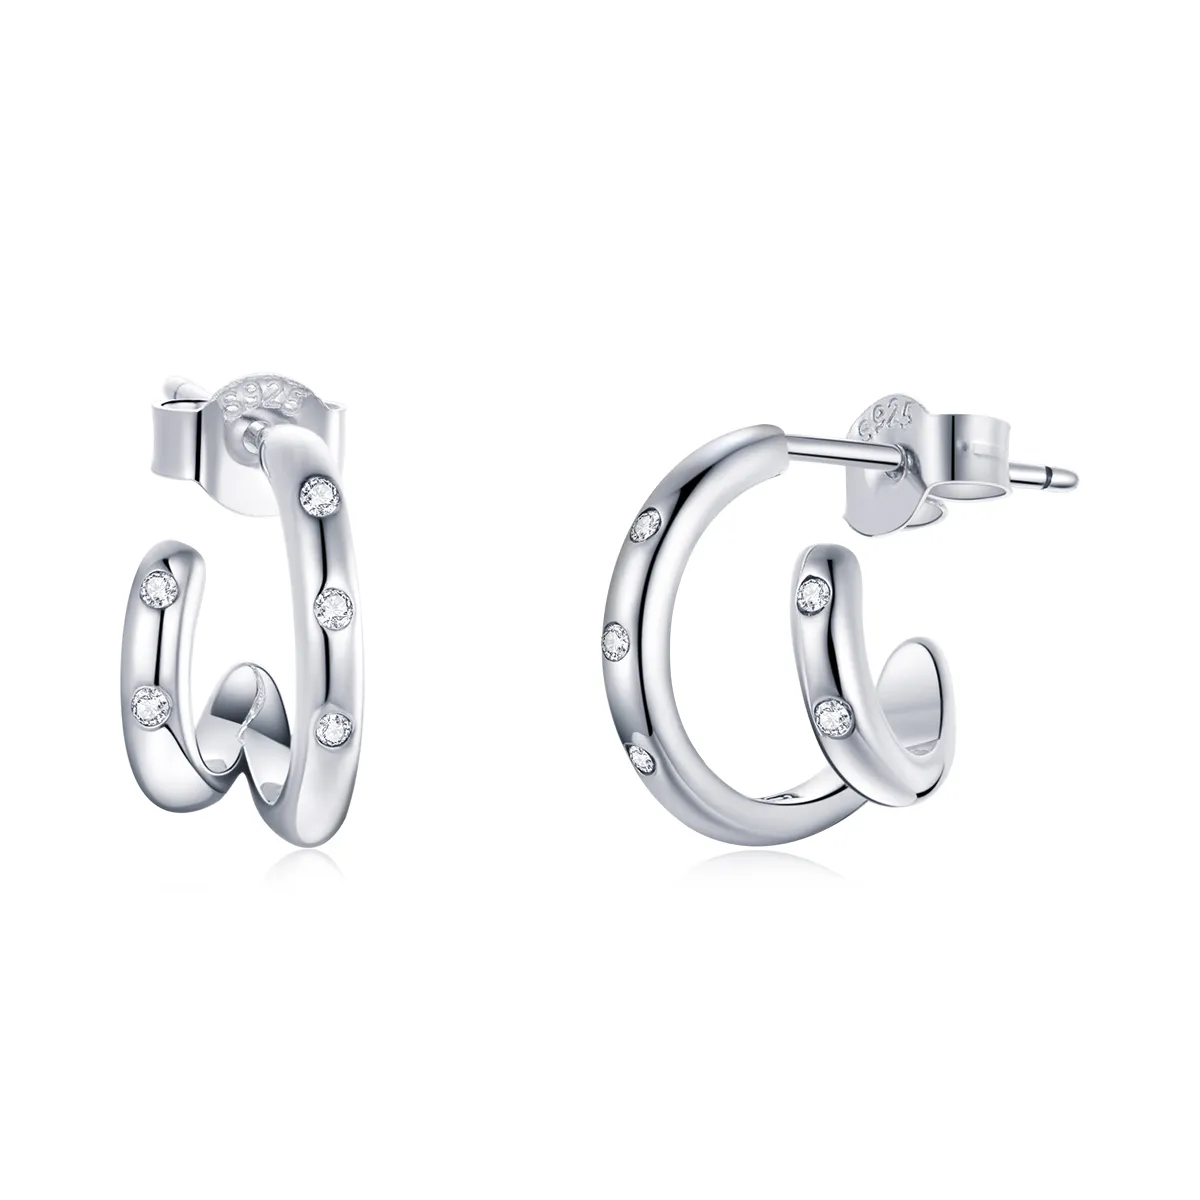 Pandora Style Double Circle Stud Earrings - BSE494